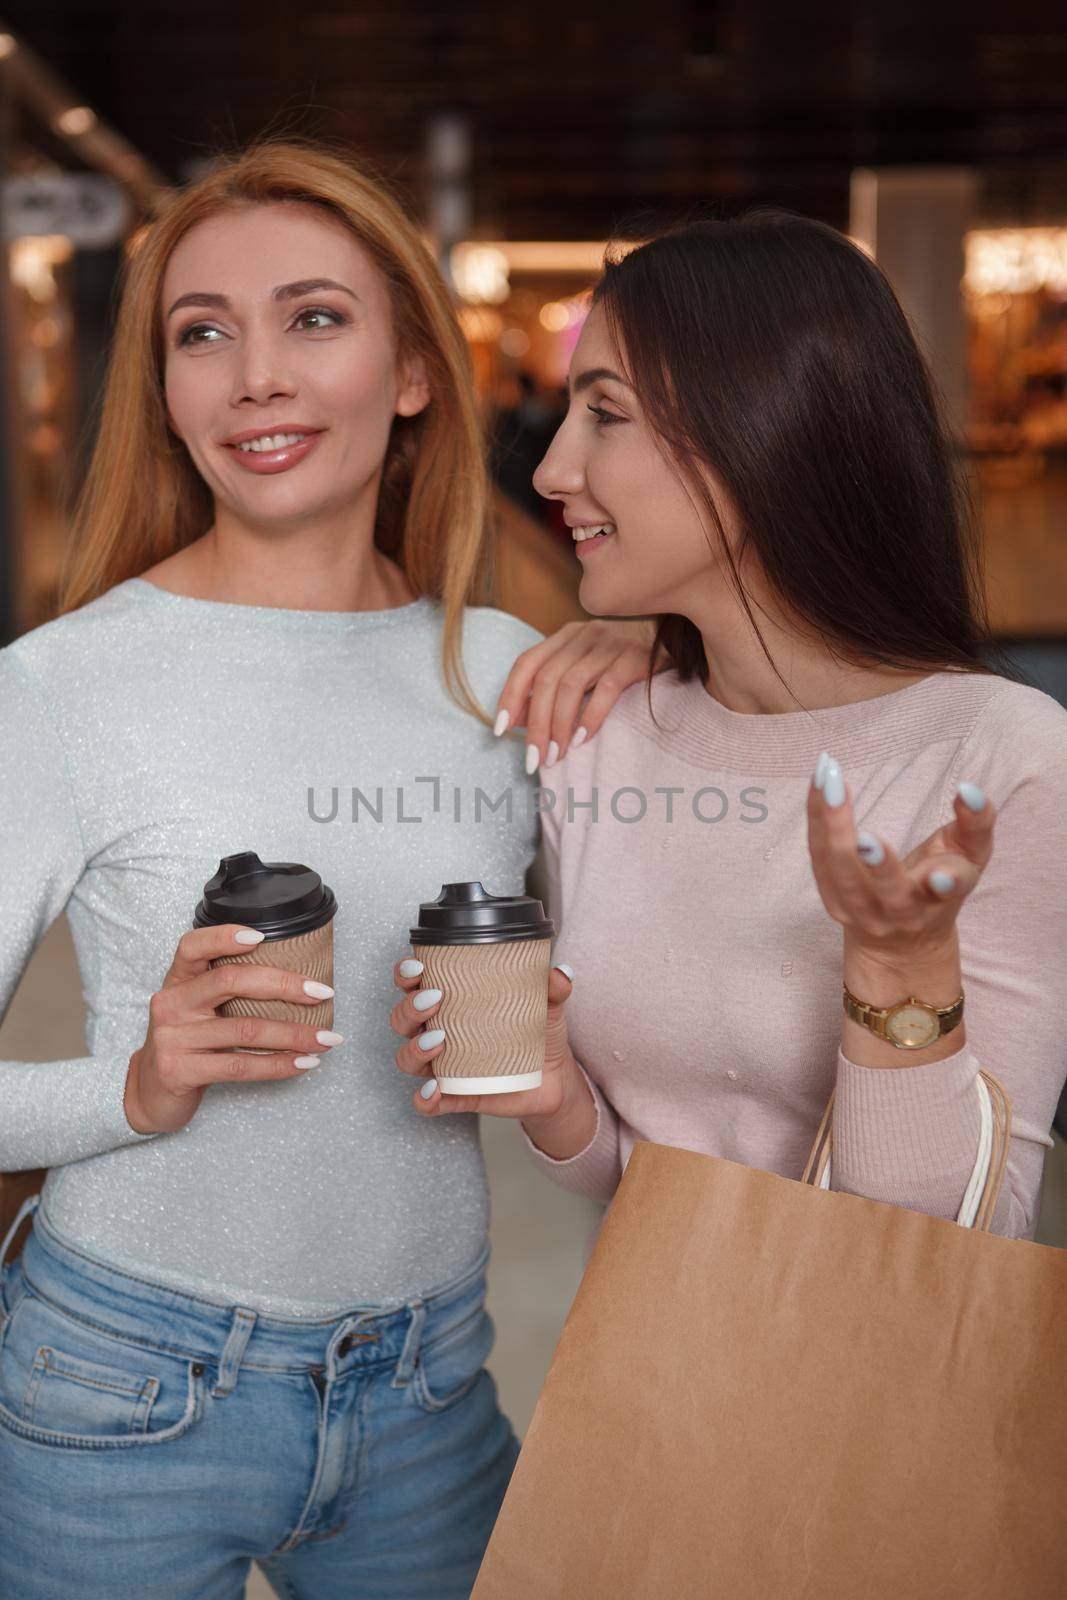 Two beautiful female friends laughing, enjoying shopping together